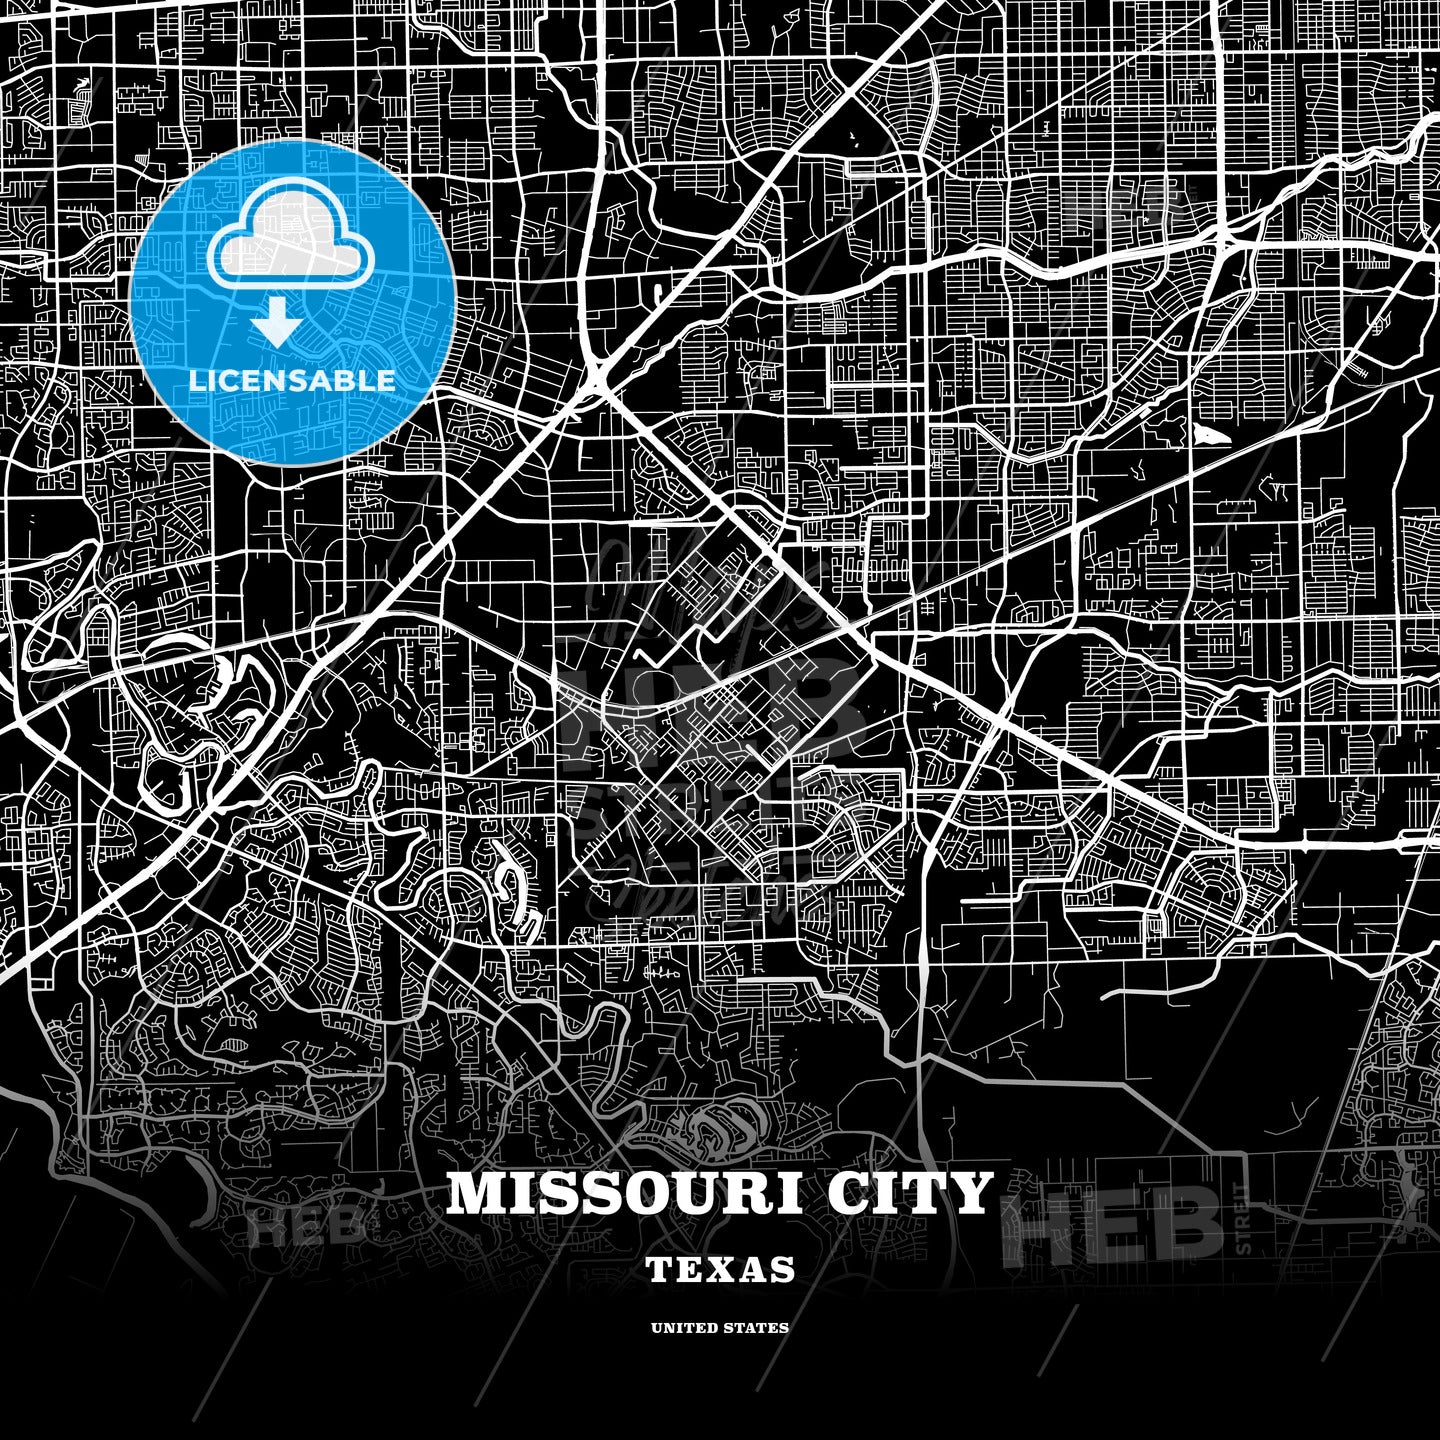 Missouri City, Texas, USA map